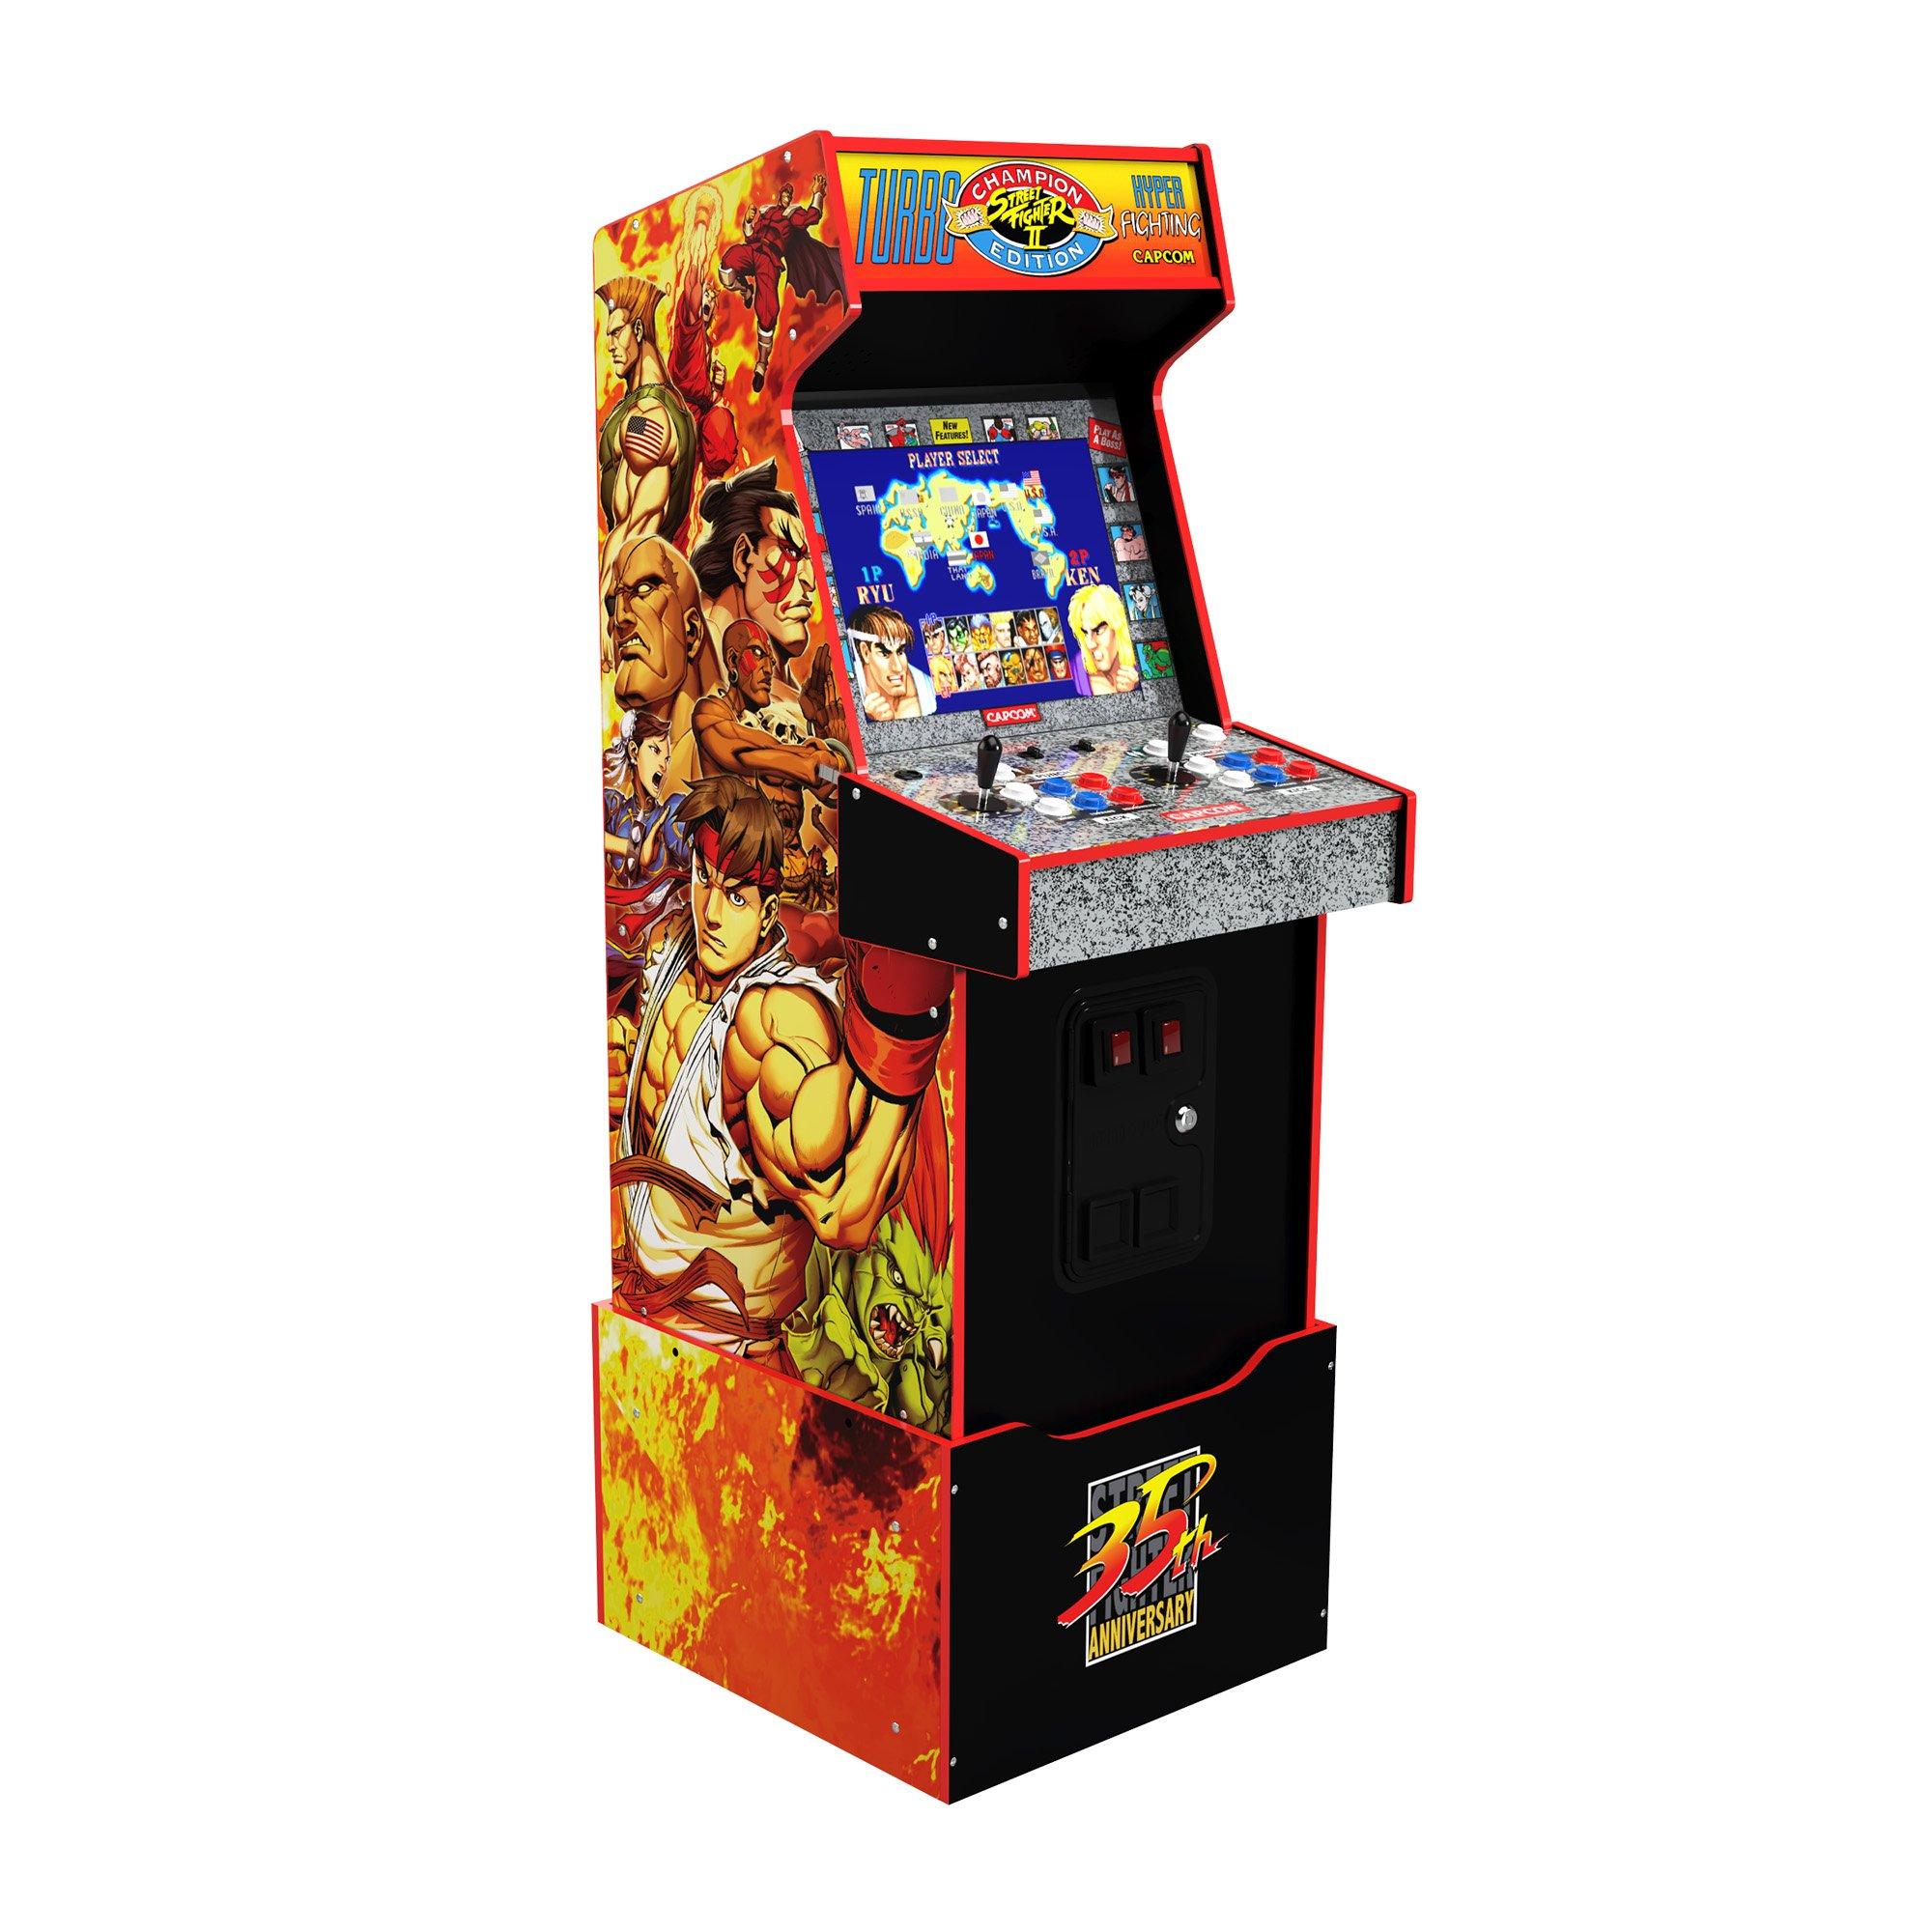 VideoGameArt&Tidbits on X: Super Street Fighter II Turbo - promotional  image (arcade) 1994.  / X